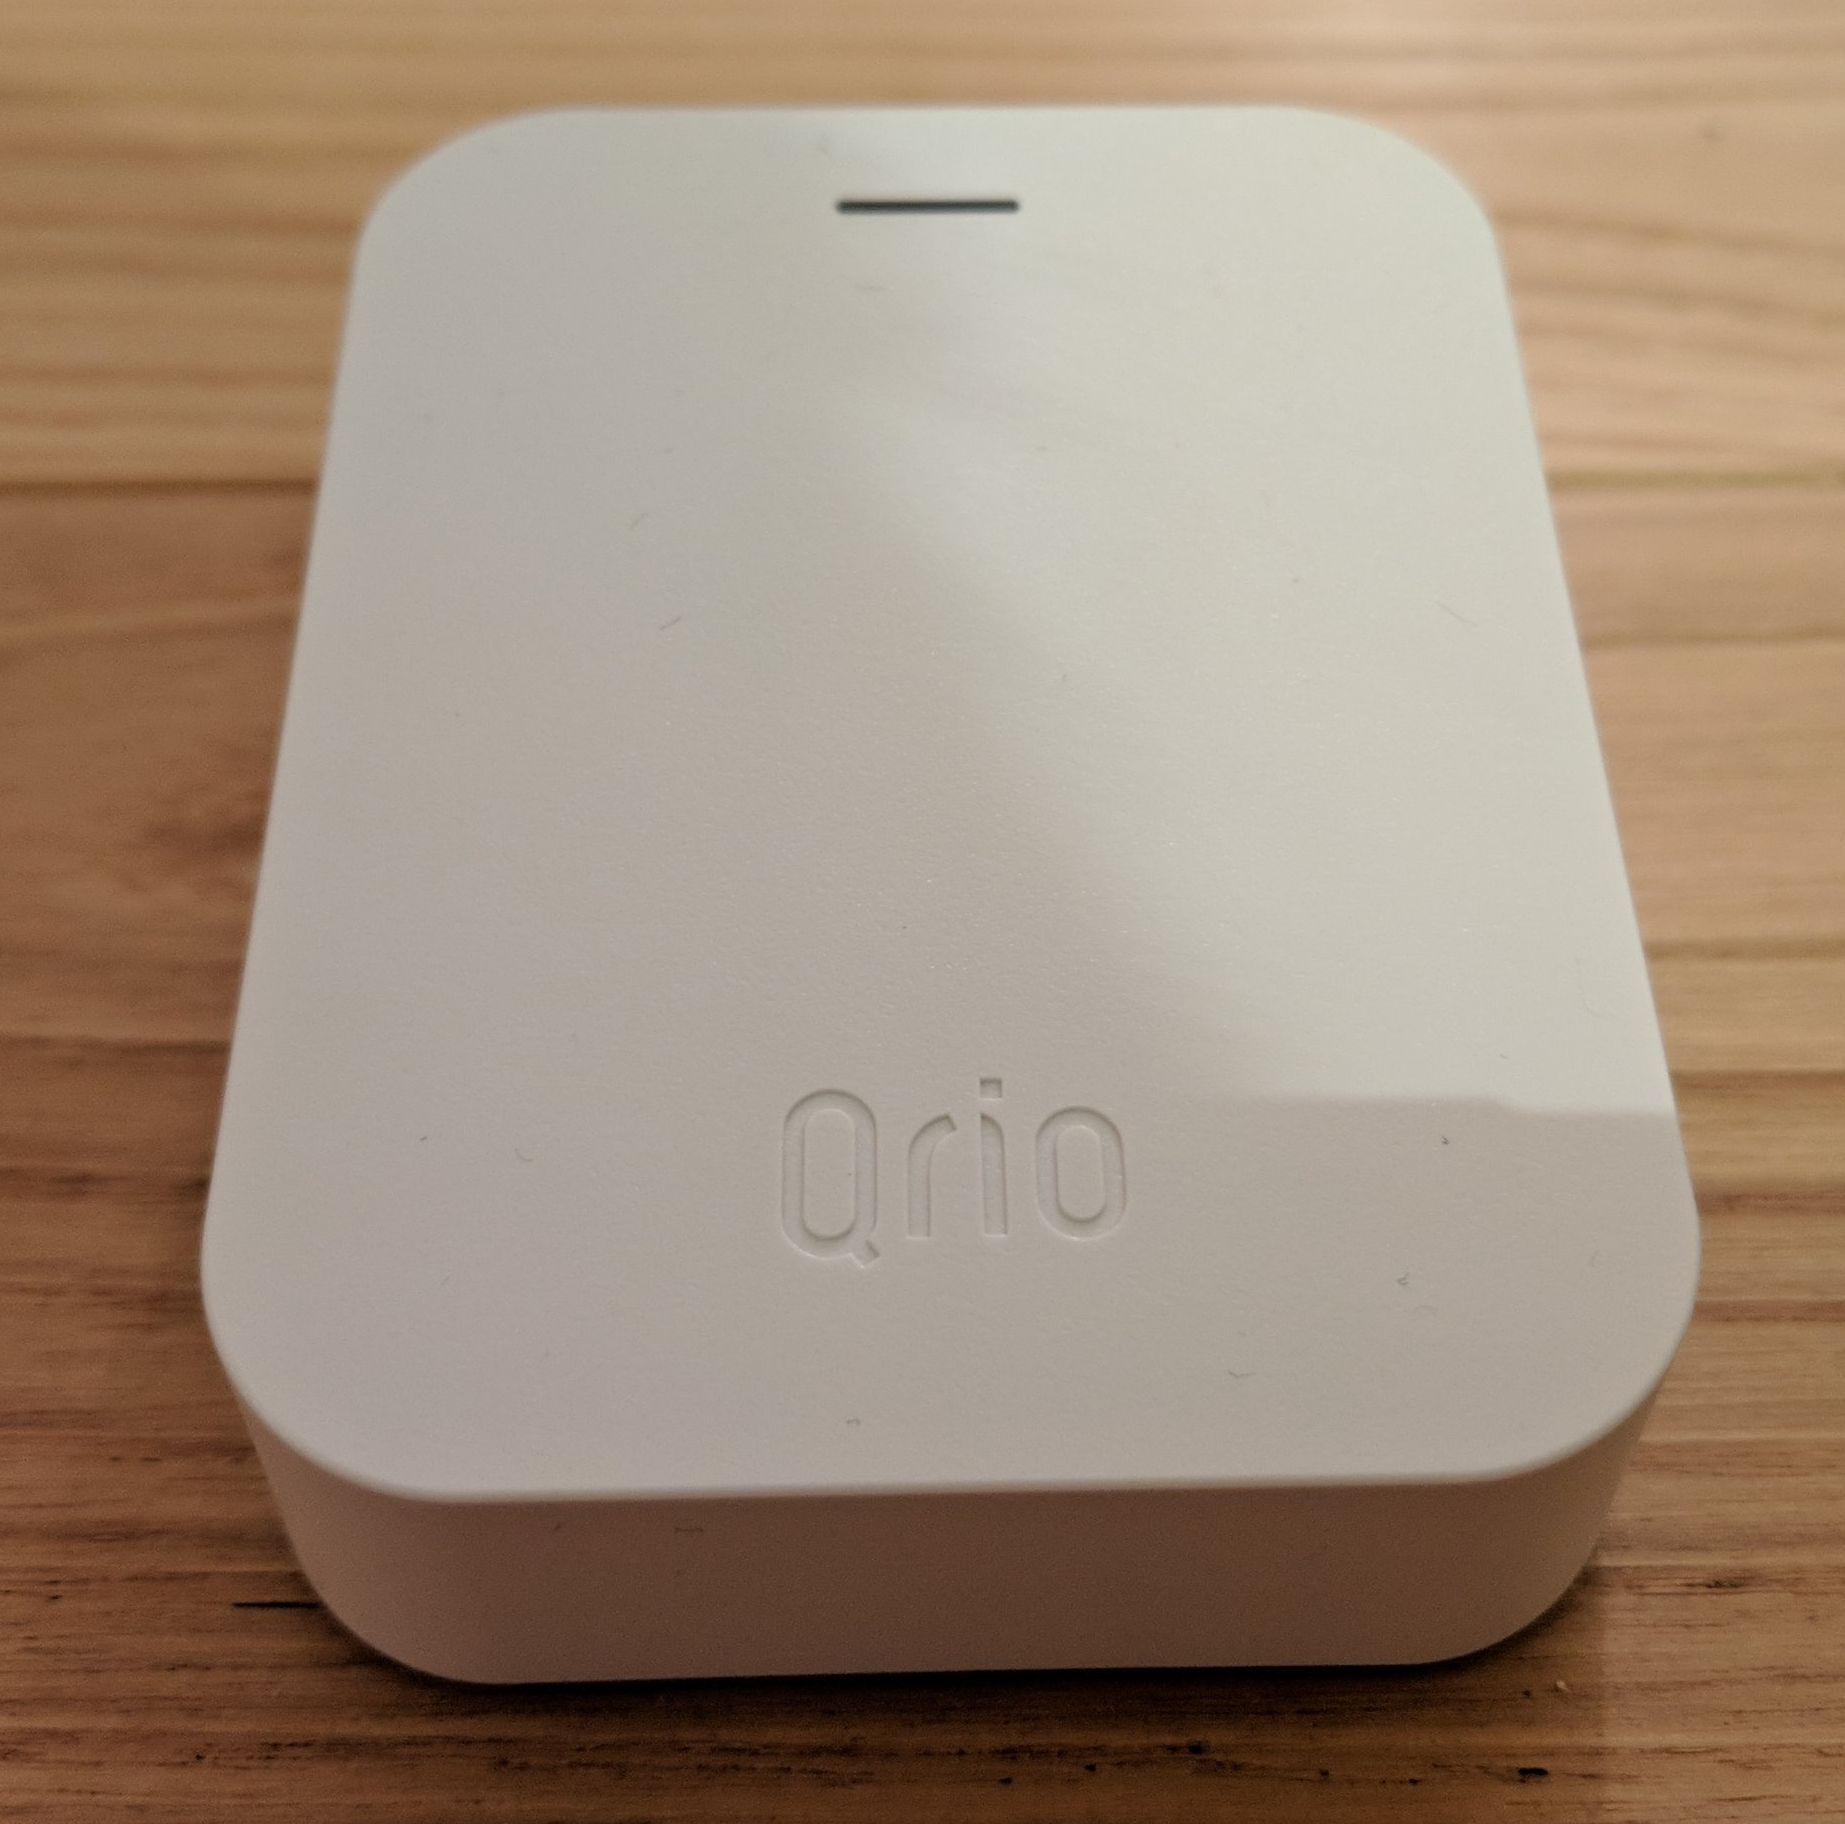 Qrio Hub。Qrio LockをWiFiでネットに接続